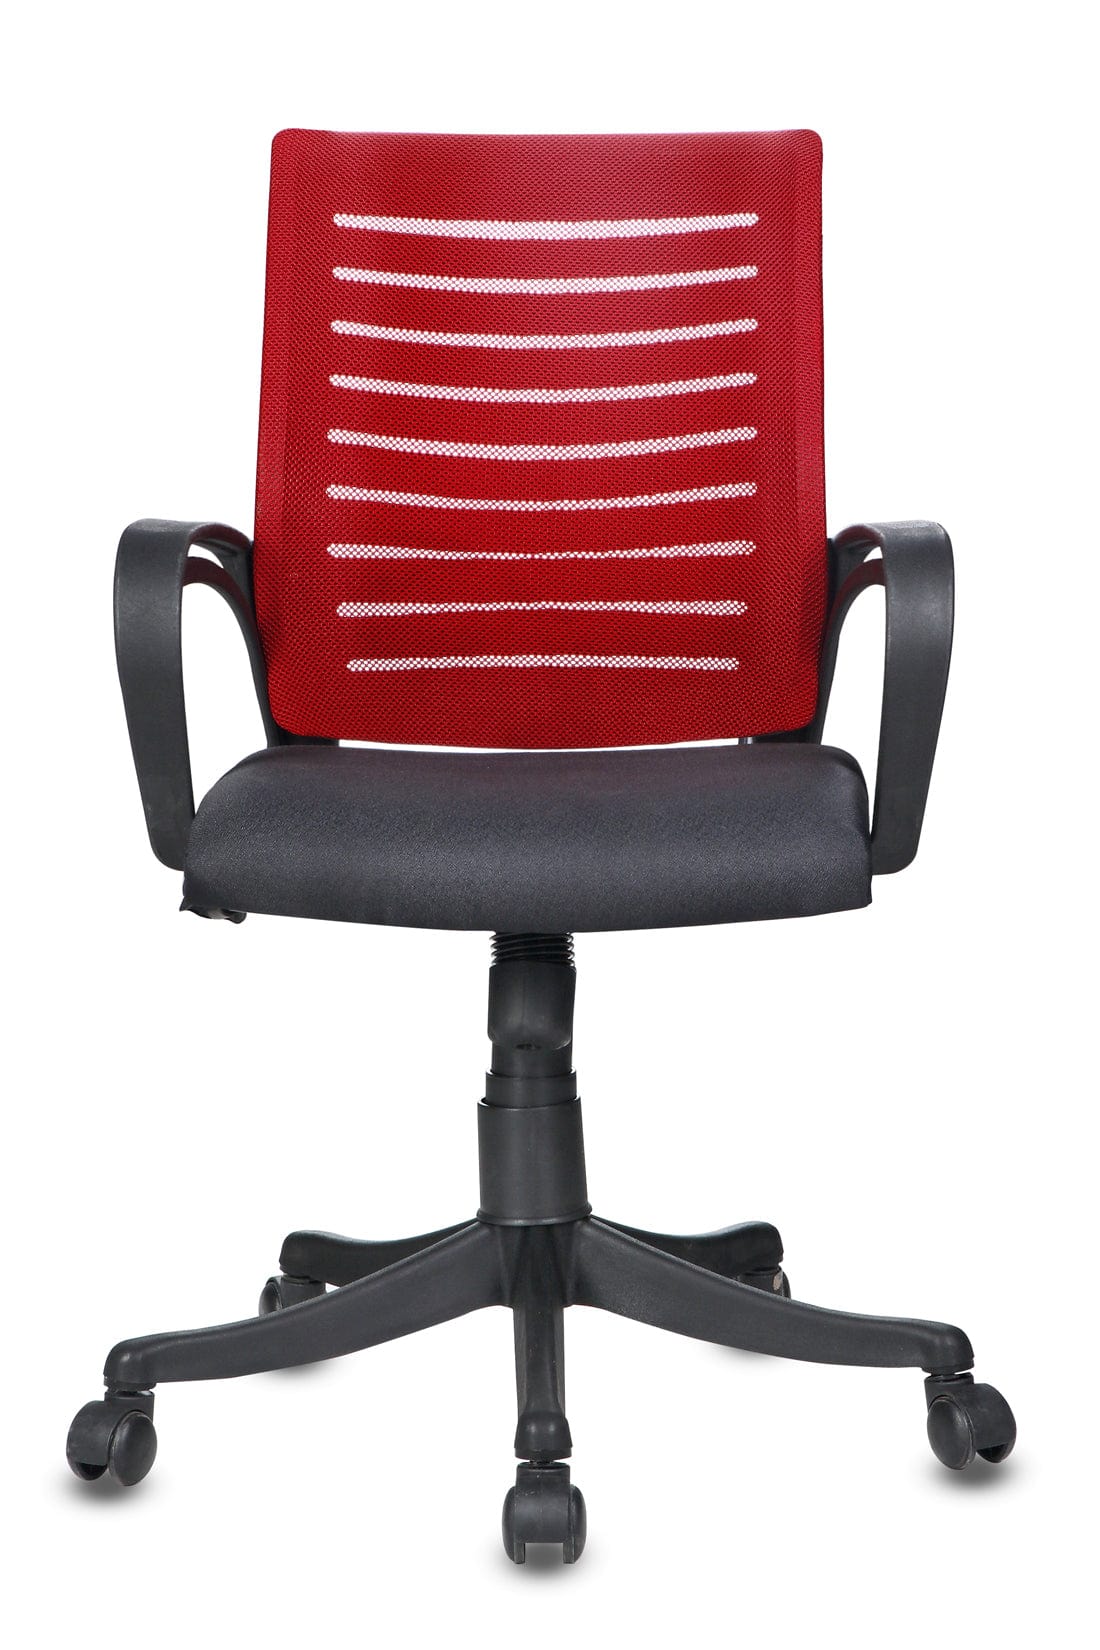 Adiko Superb Mesh chair in Red